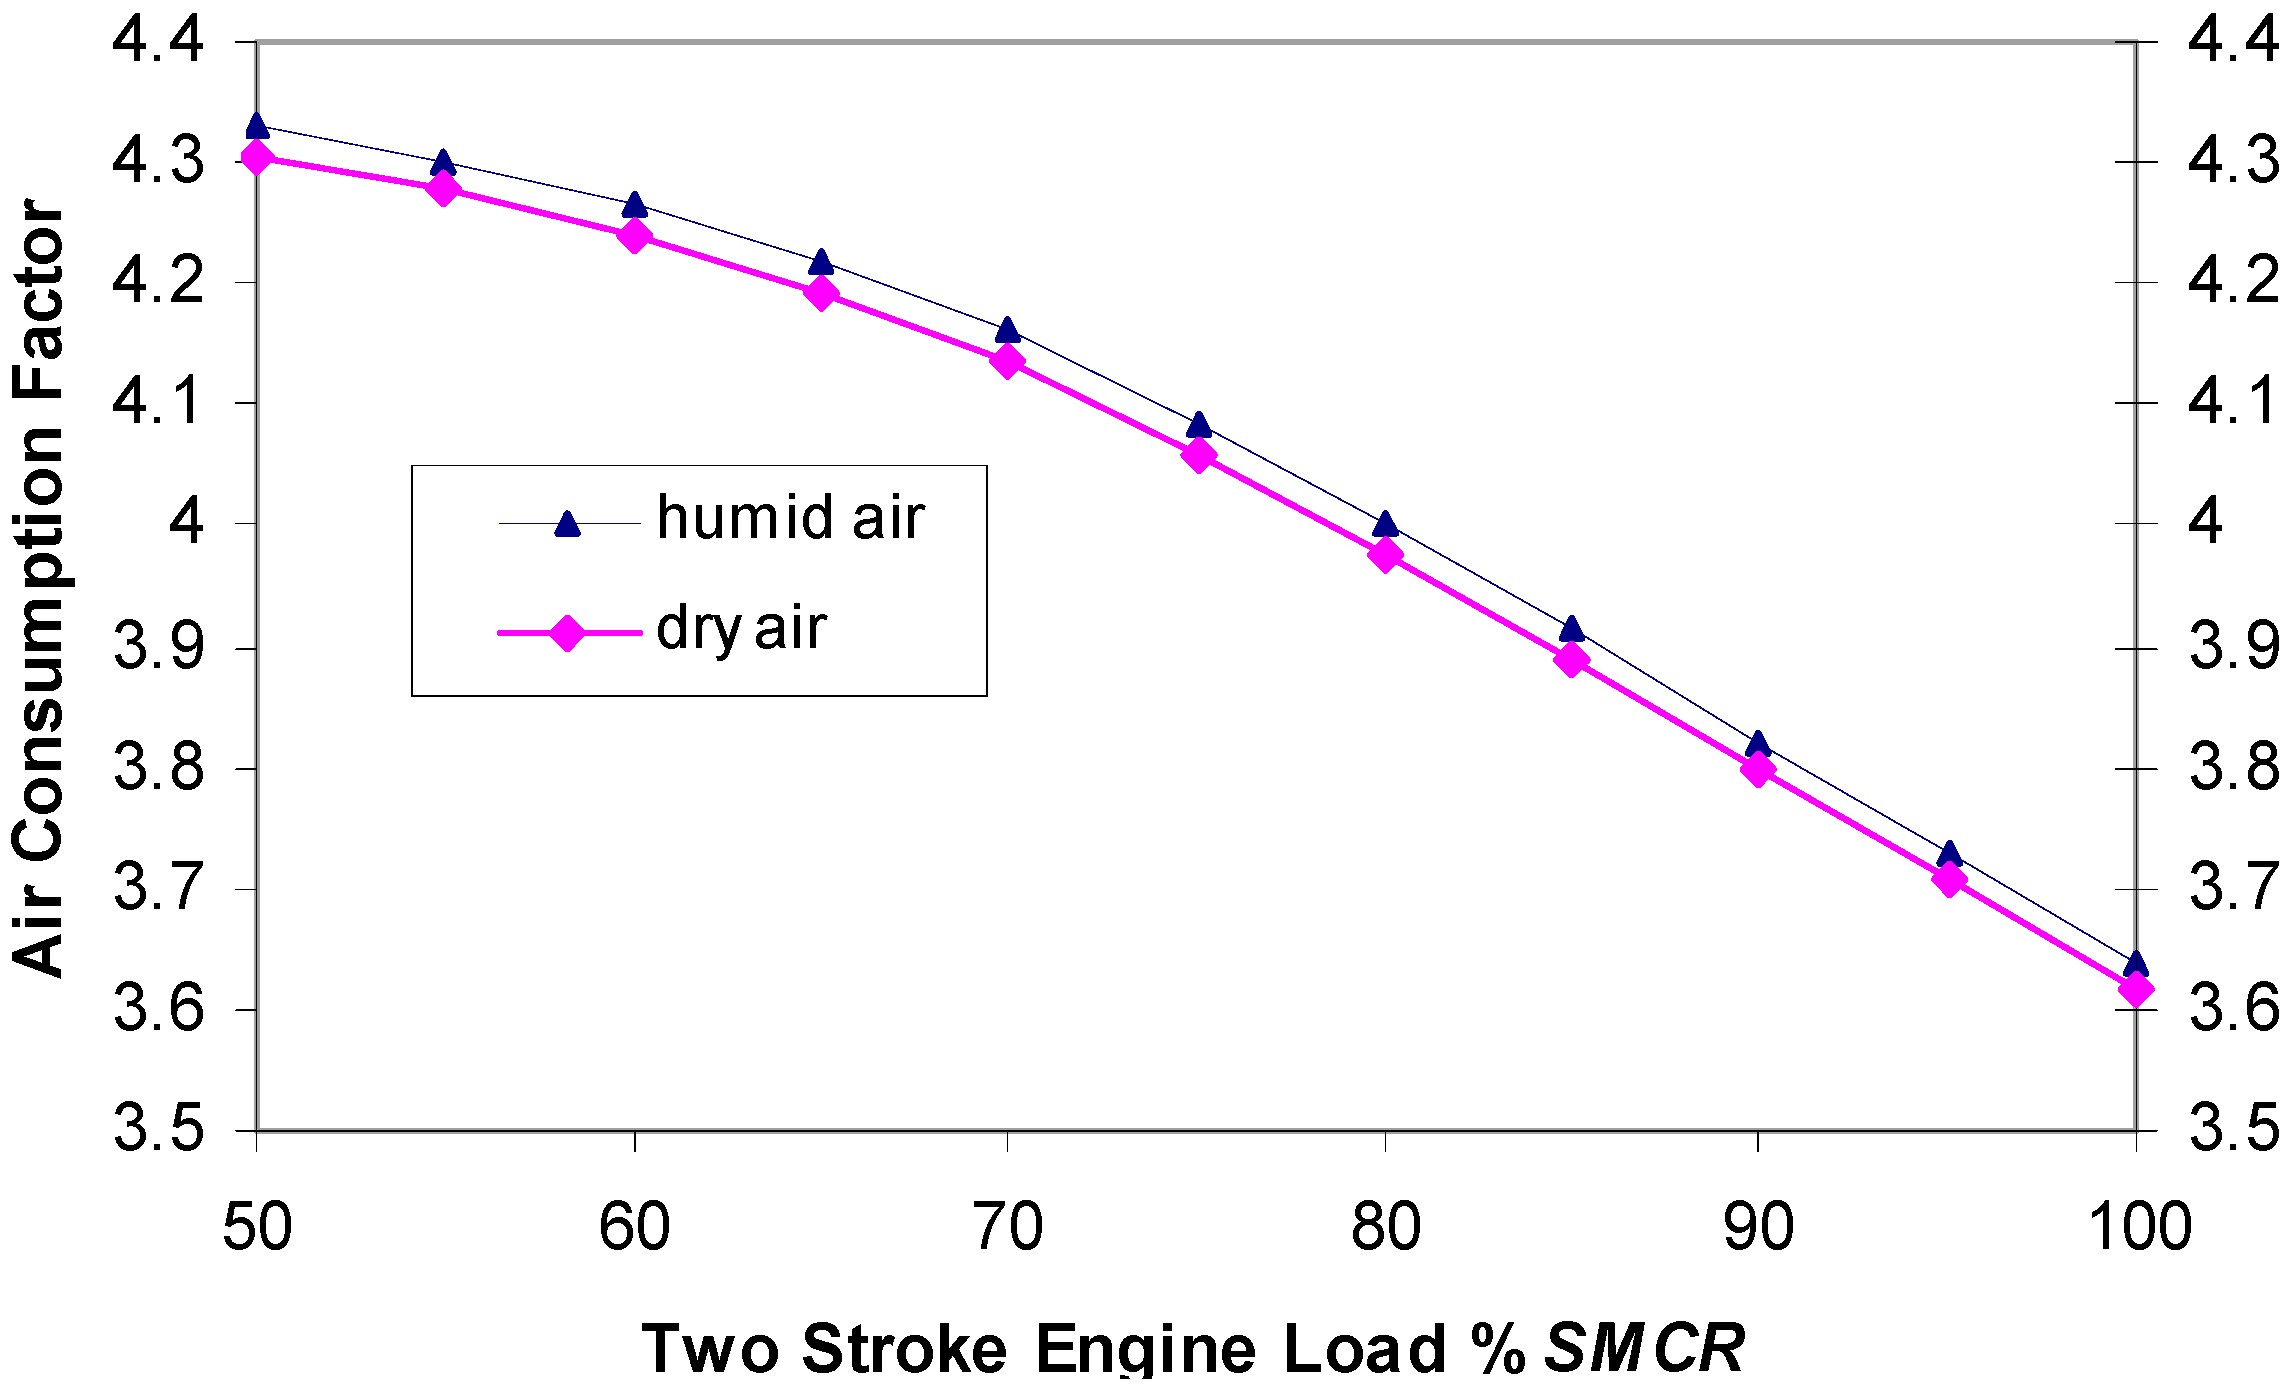 Valve Timing Diagram Of Four Stroke Diesel Engine Energies Free Full Text Of Valve Timing Diagram Of Four Stroke Diesel Engine